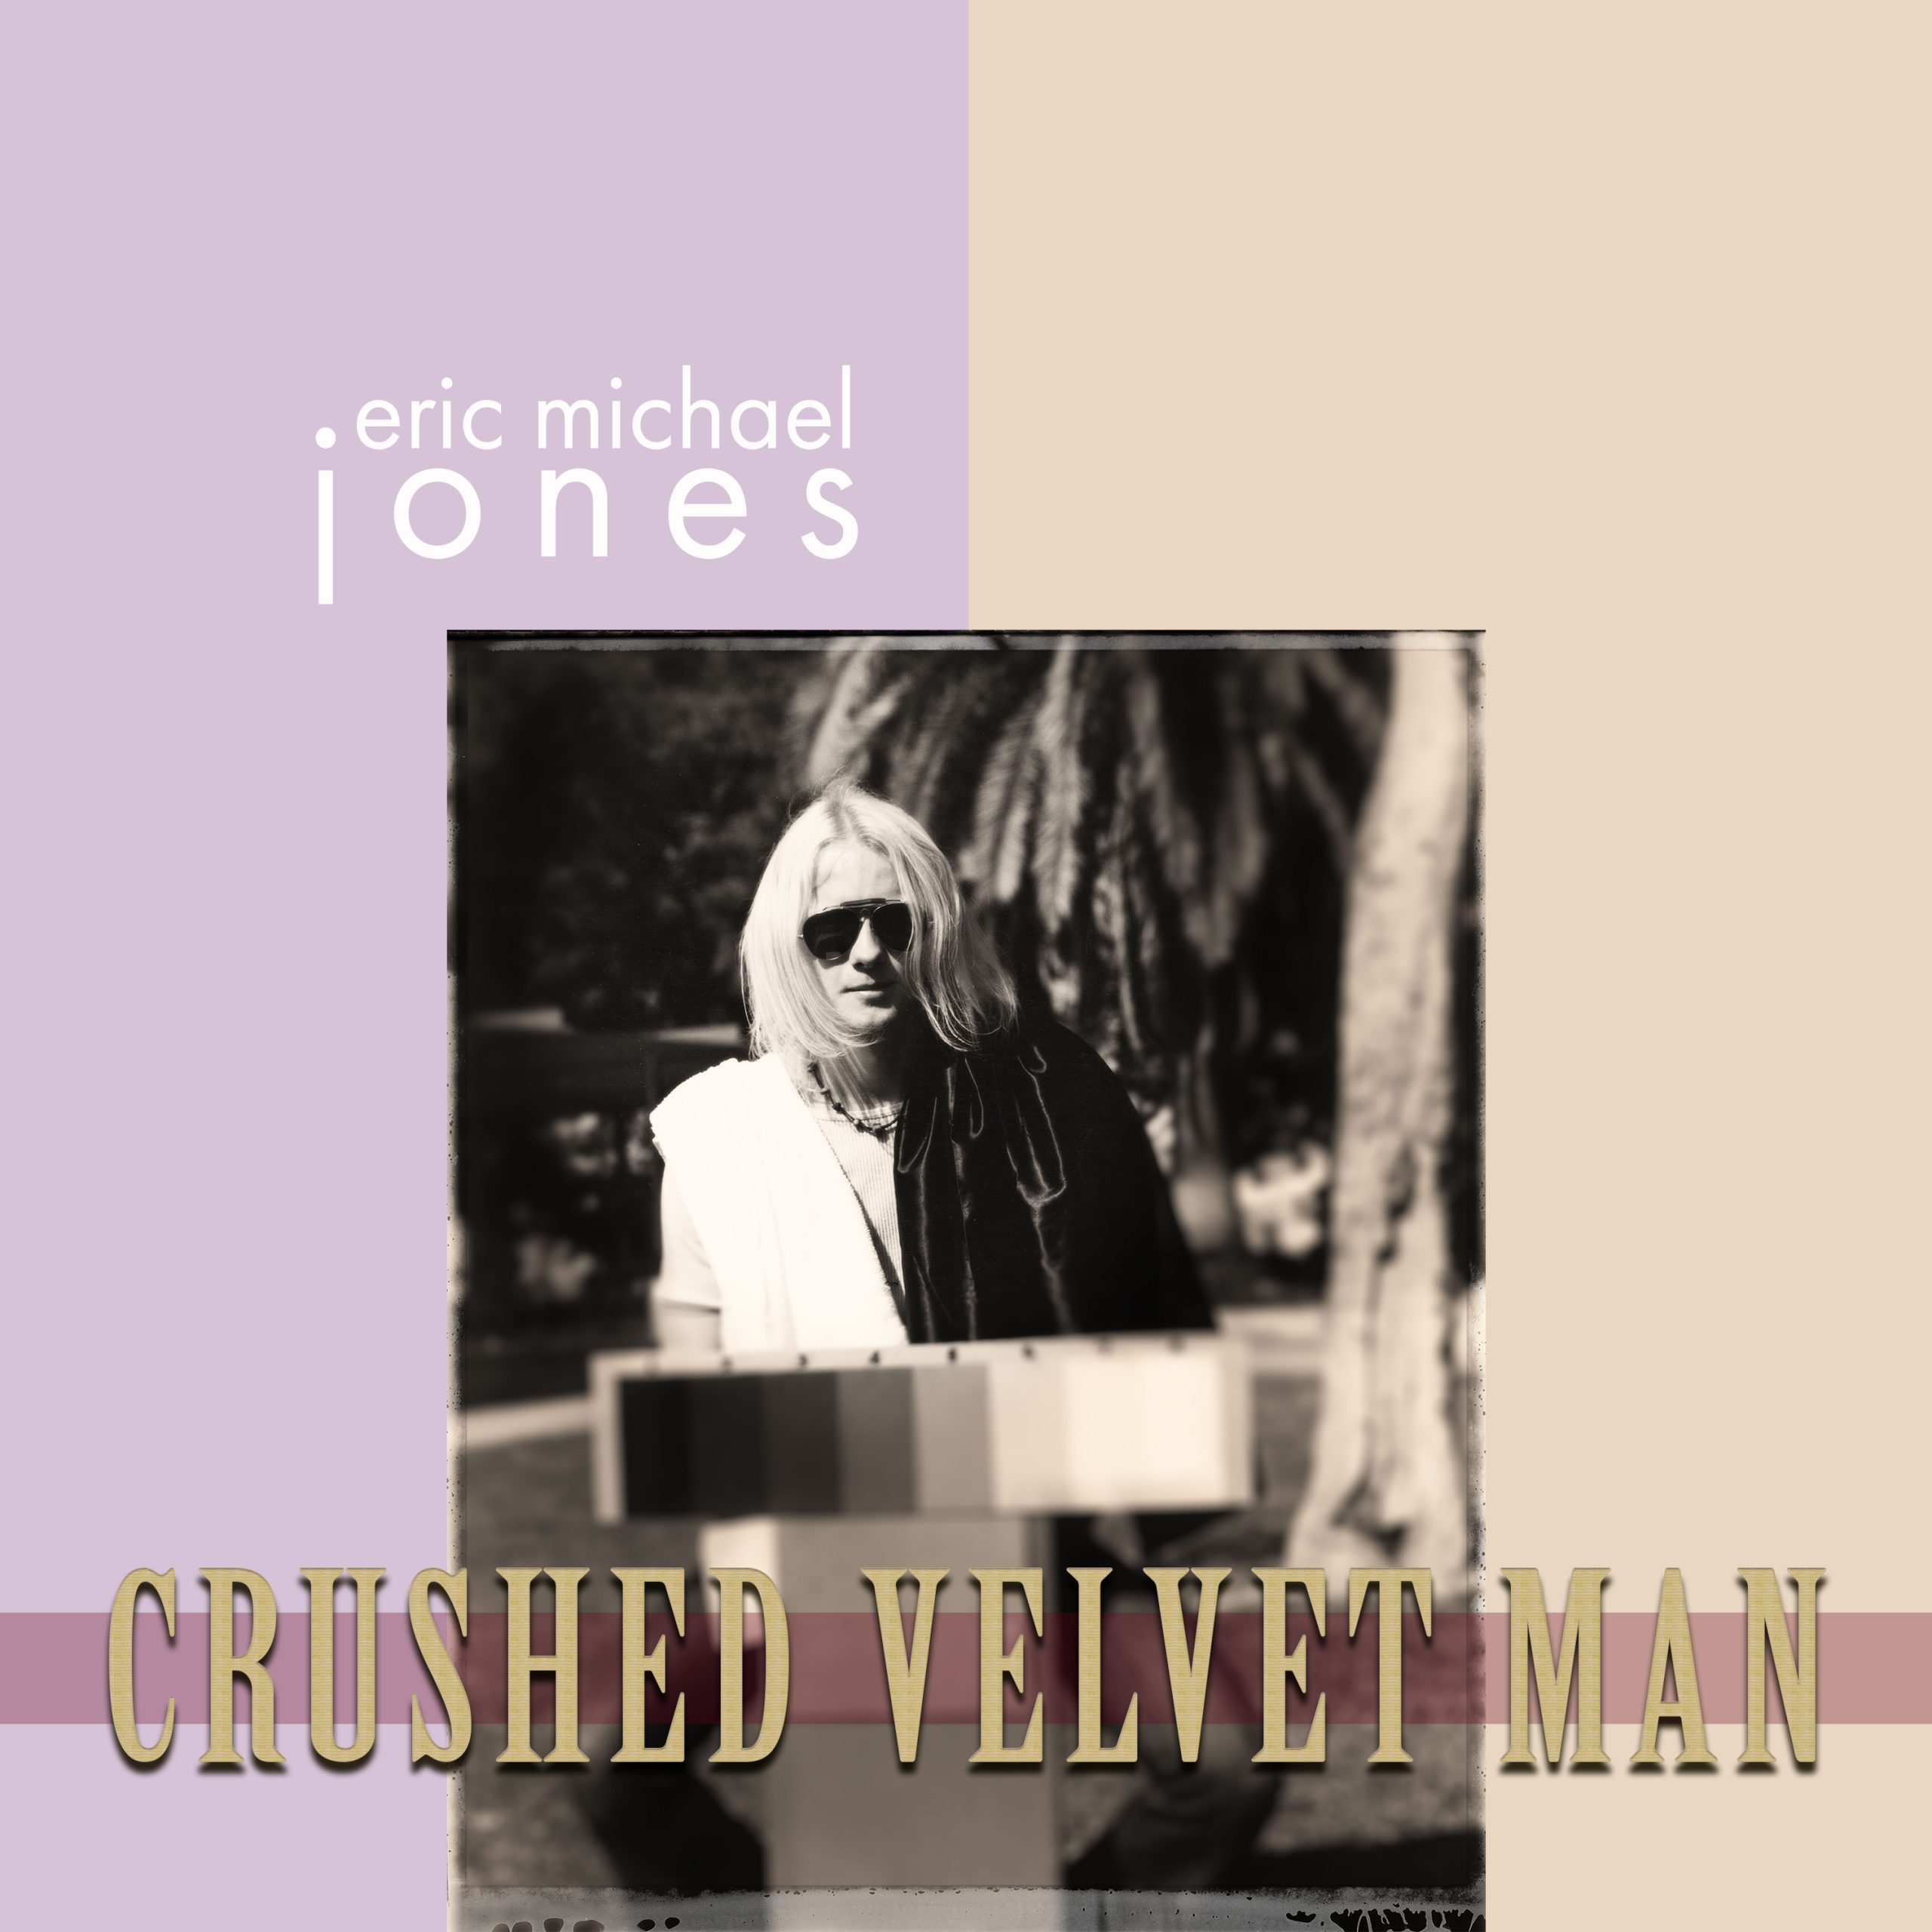 Cover art for Crushed Velvet Man shows Eric Michael Jones in sunglasses sitting in a park